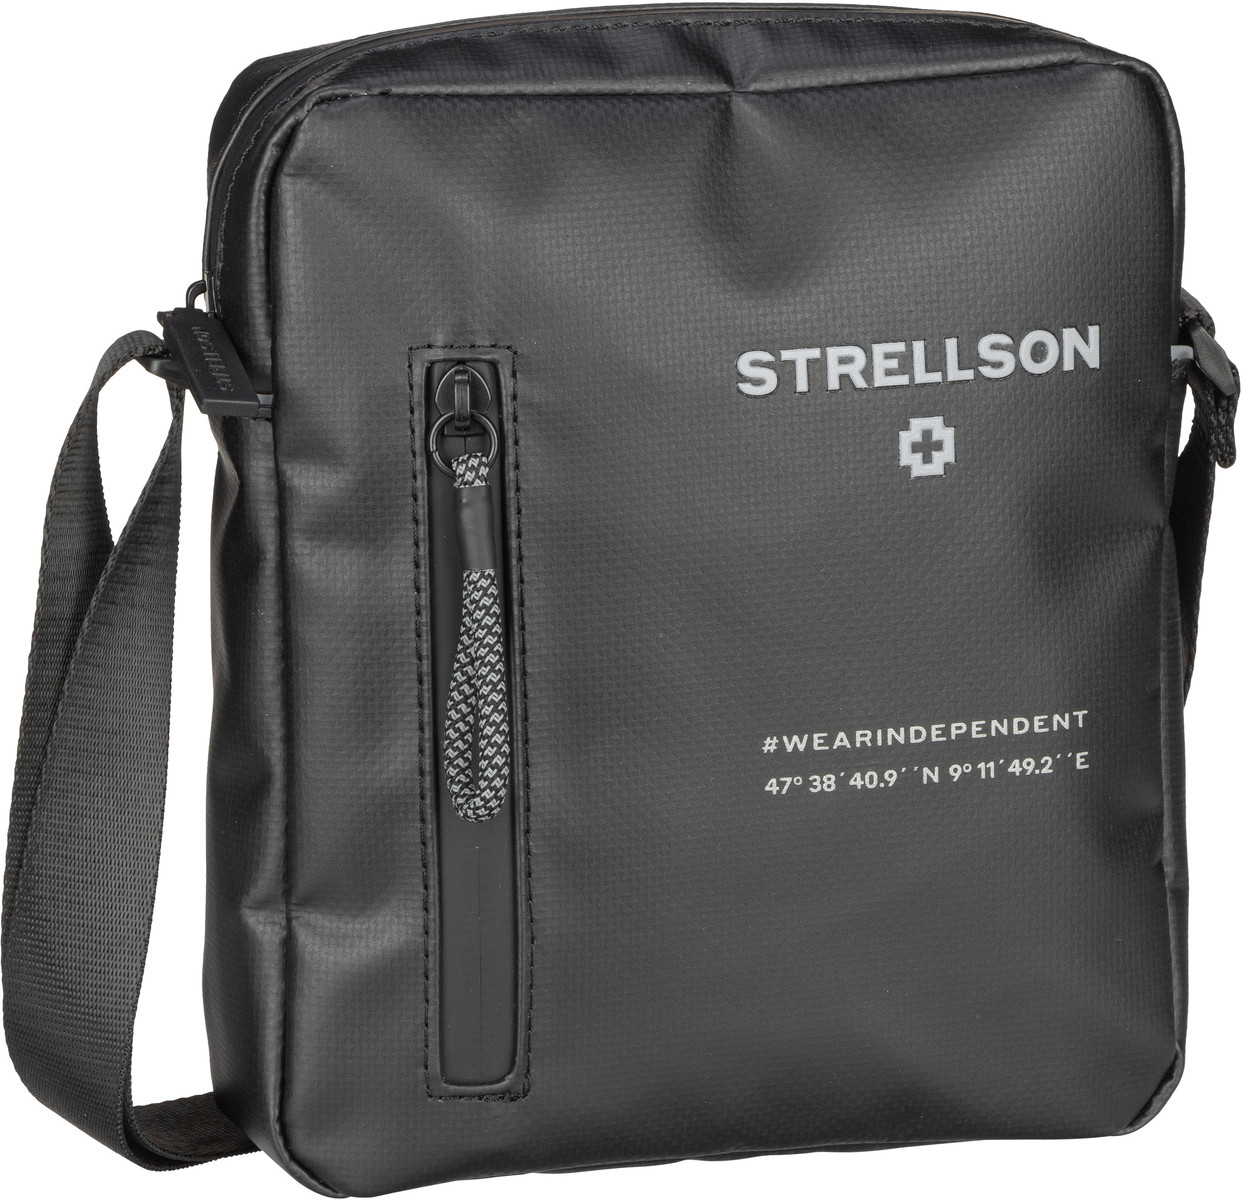 Strellson Stockwell 2.0 Marcus Shoulderbag XSVZ - Black